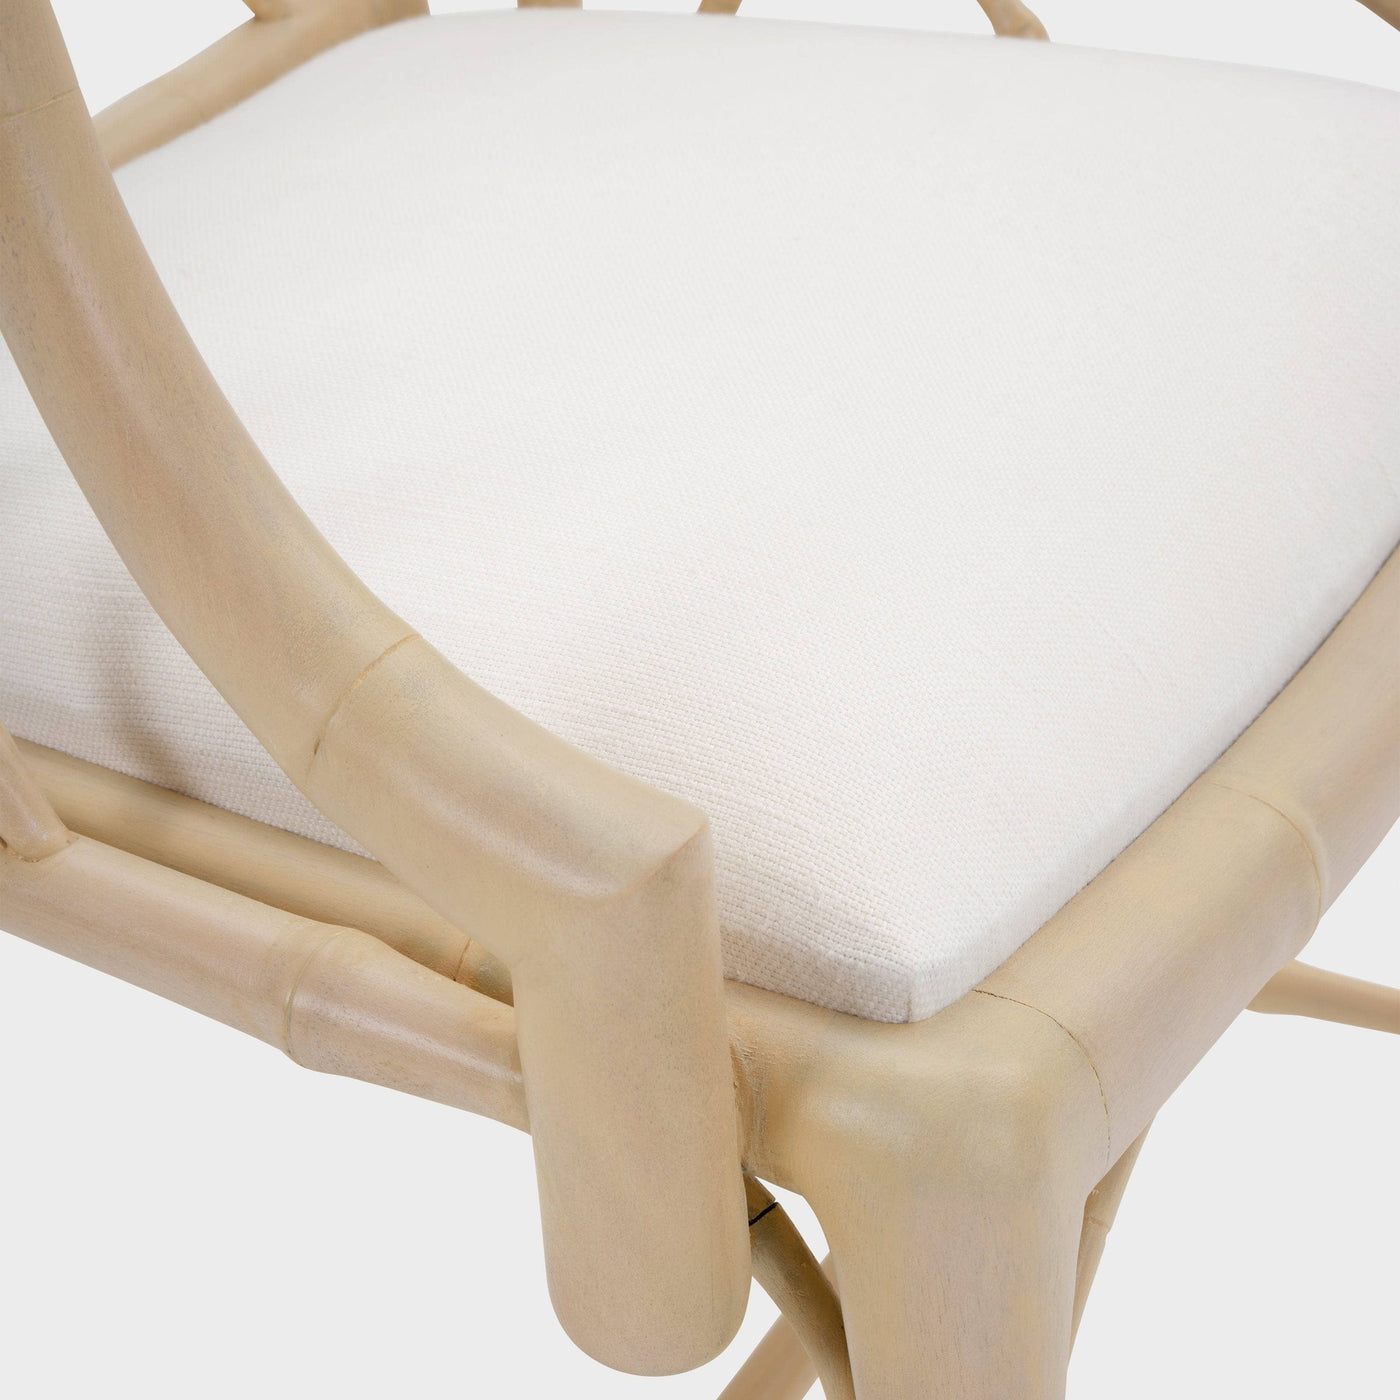 Pescari Accent Chair, Off-White - Cream Armchairs sazy.com